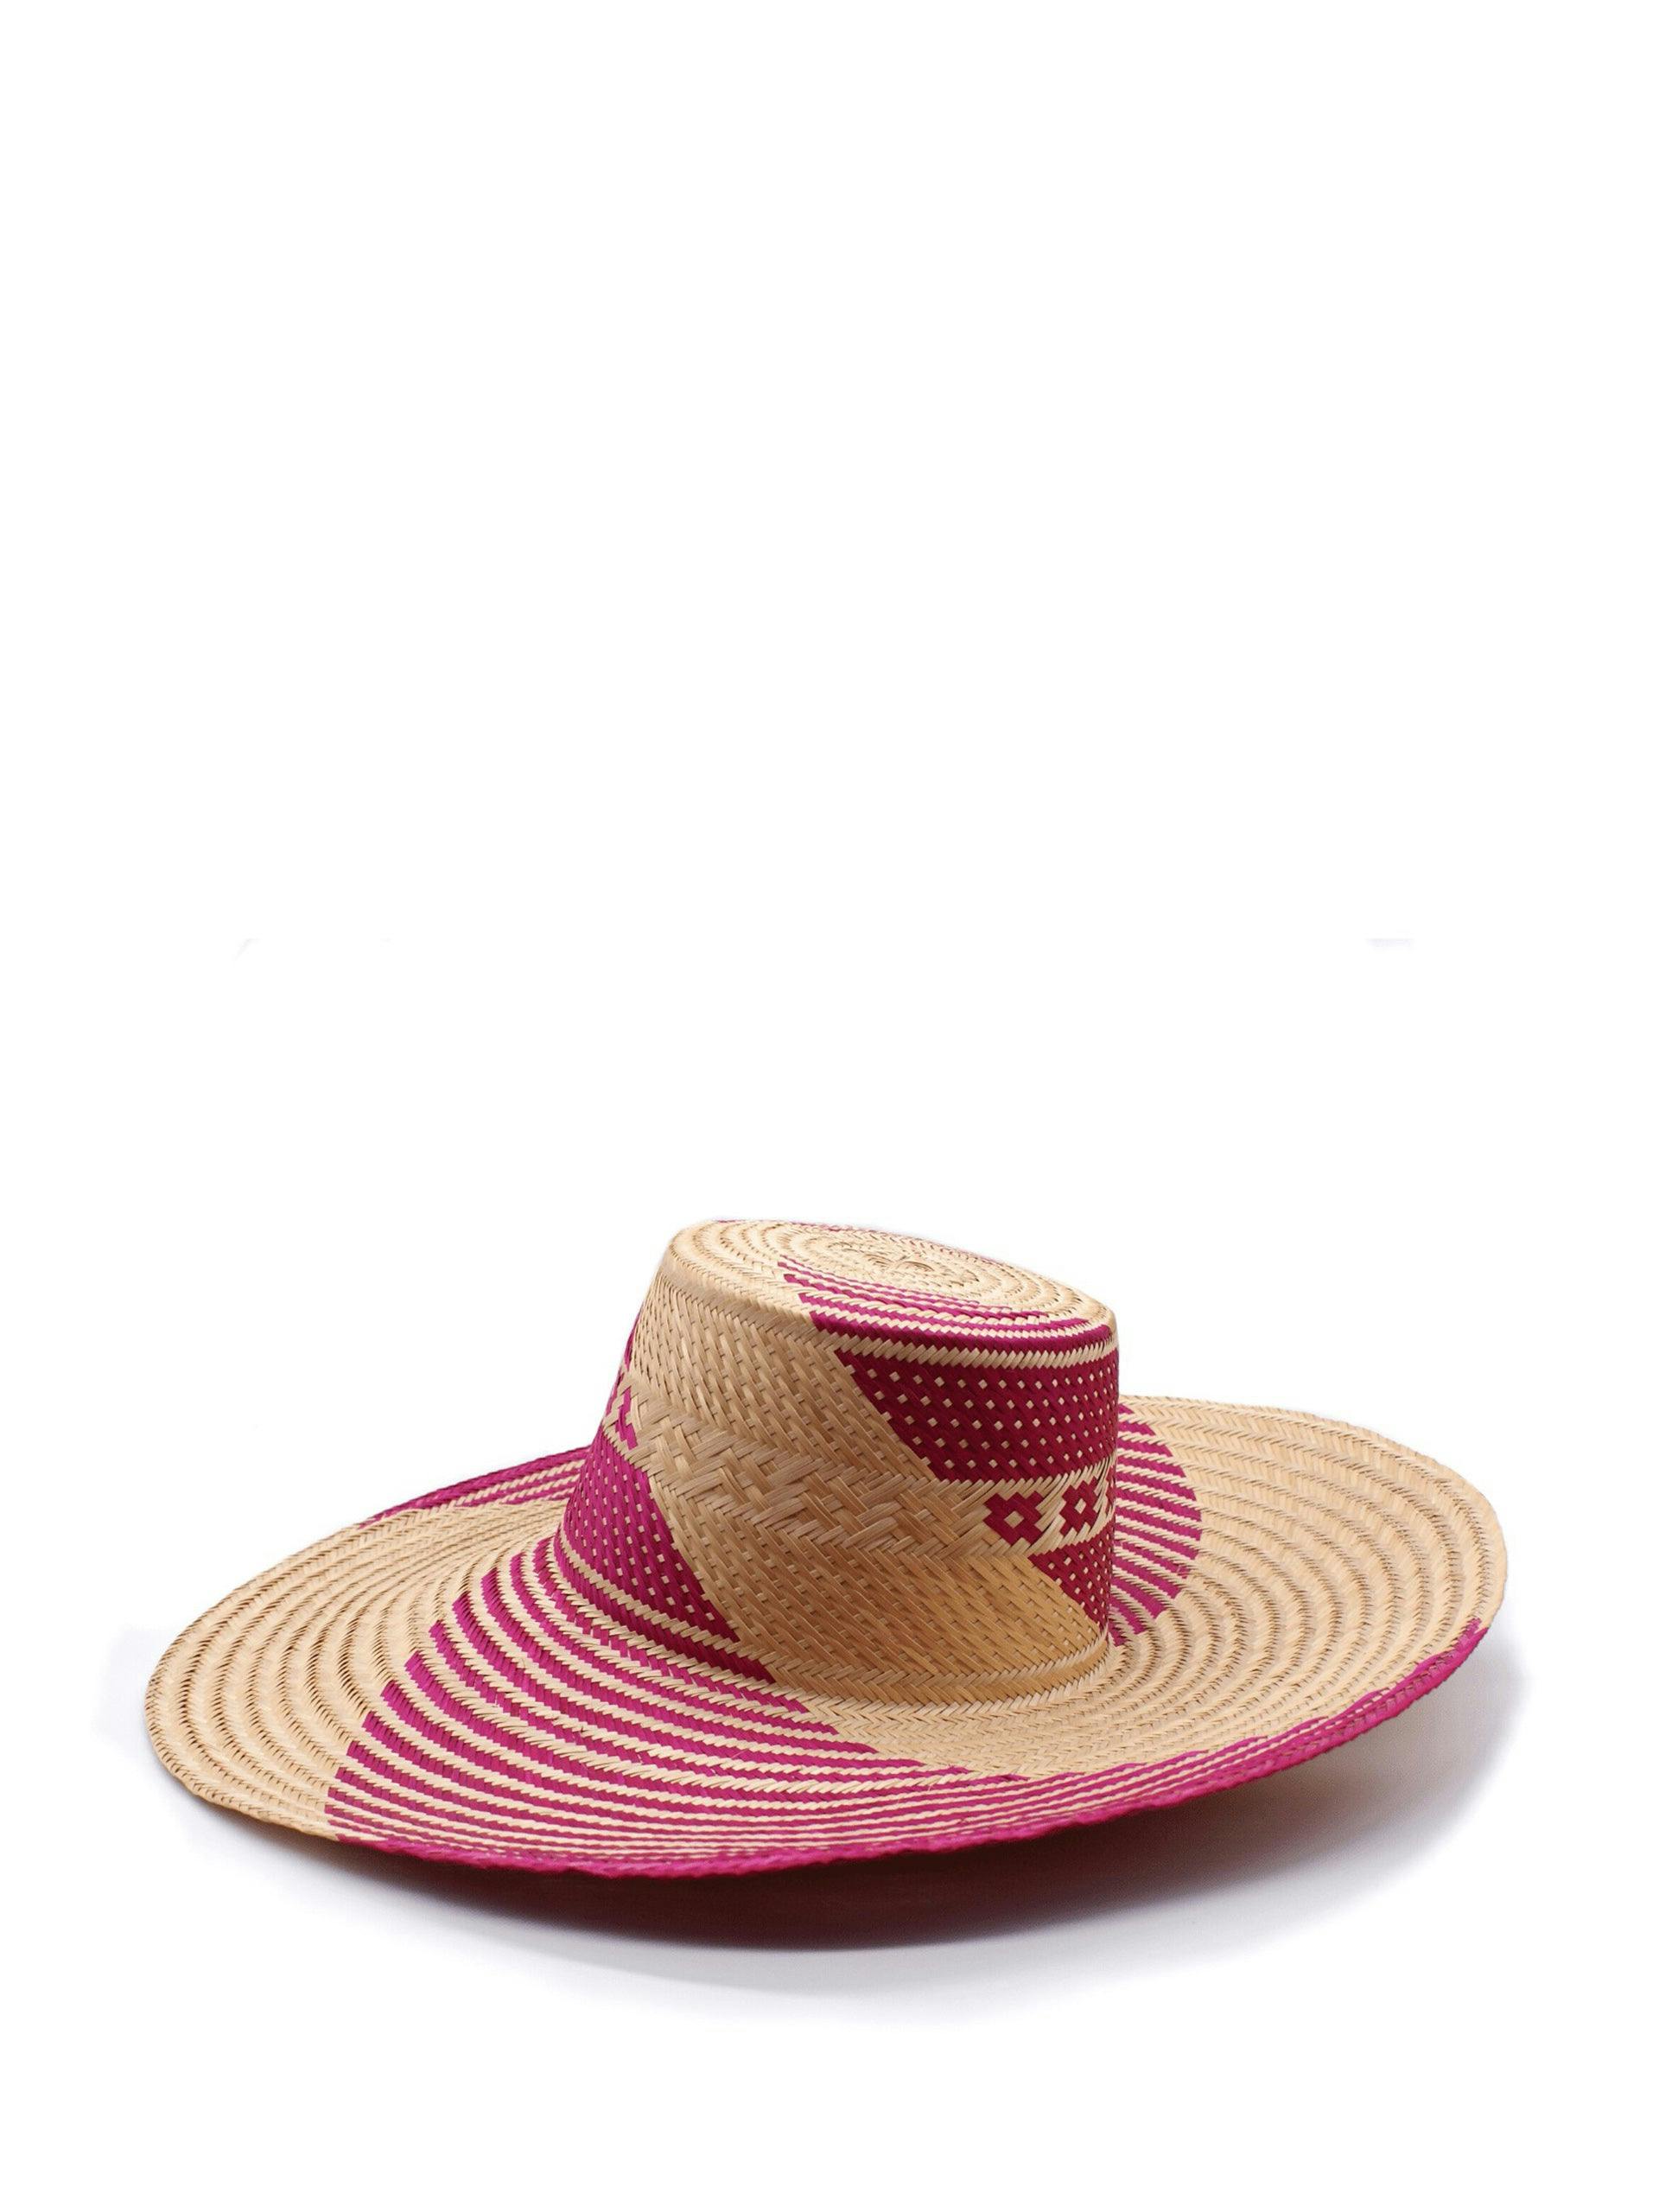 Fuchsia wide-brim straw hat